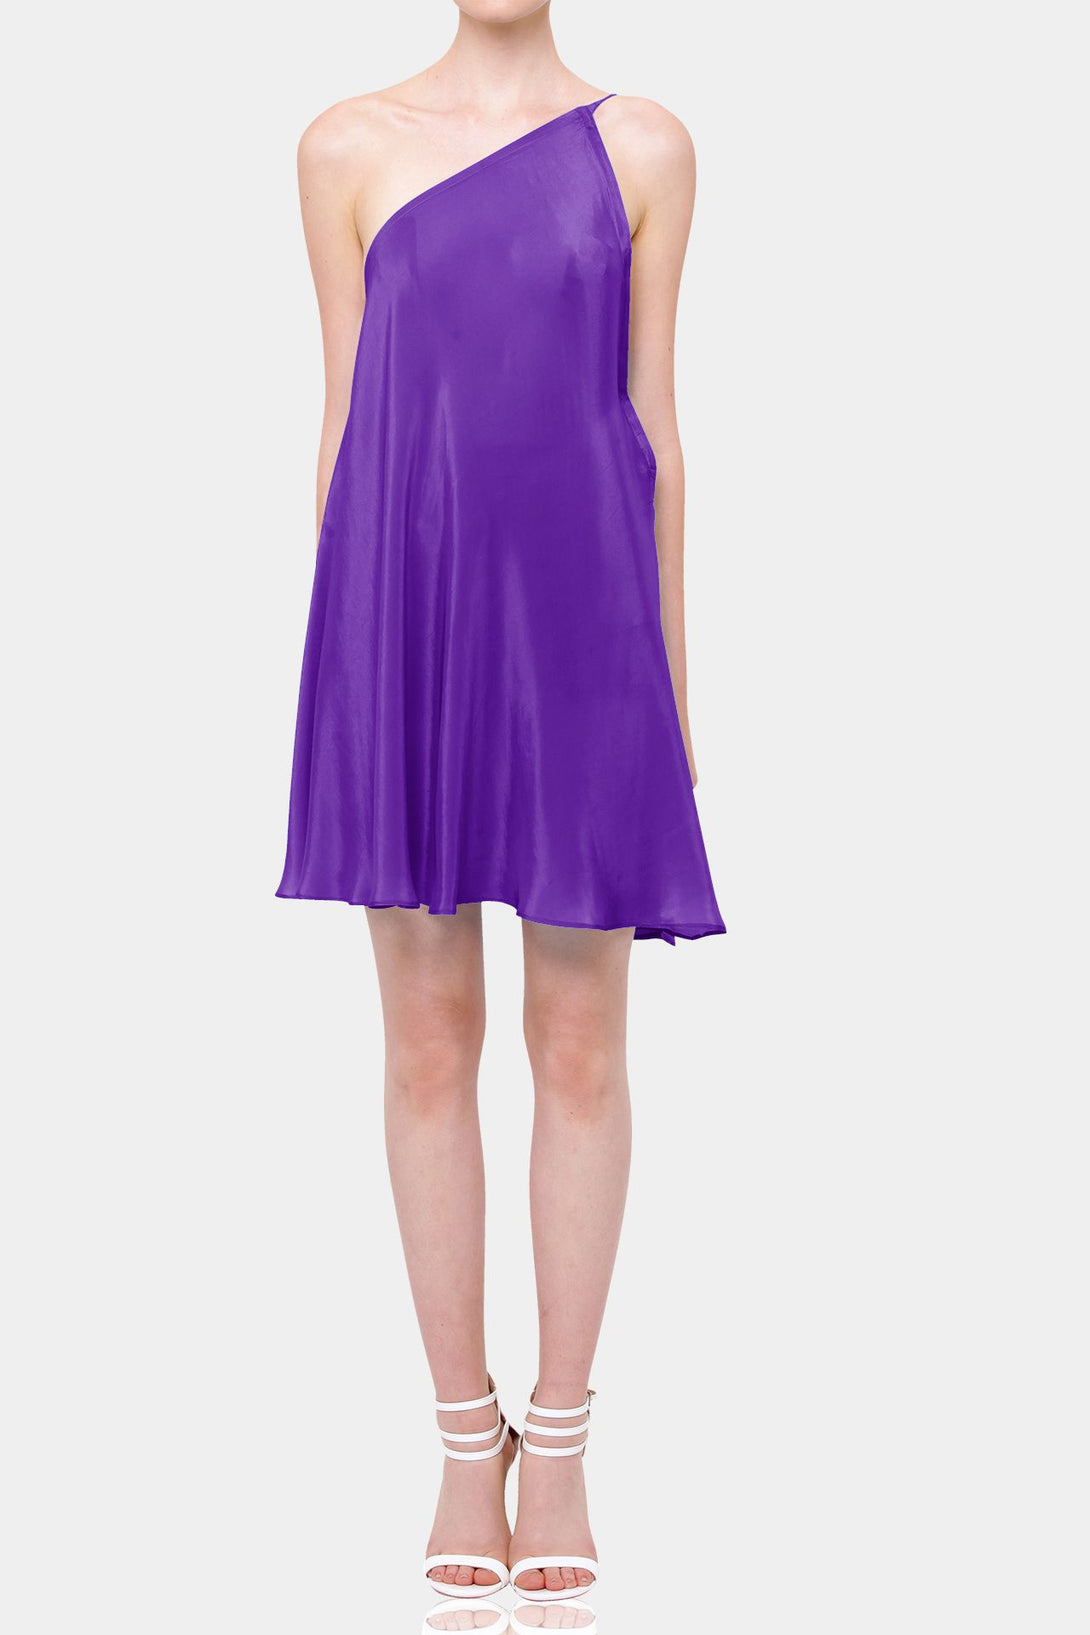  mini dress purple, Shahida Parides, cute mini dresses, short sleeveless summer dresses,